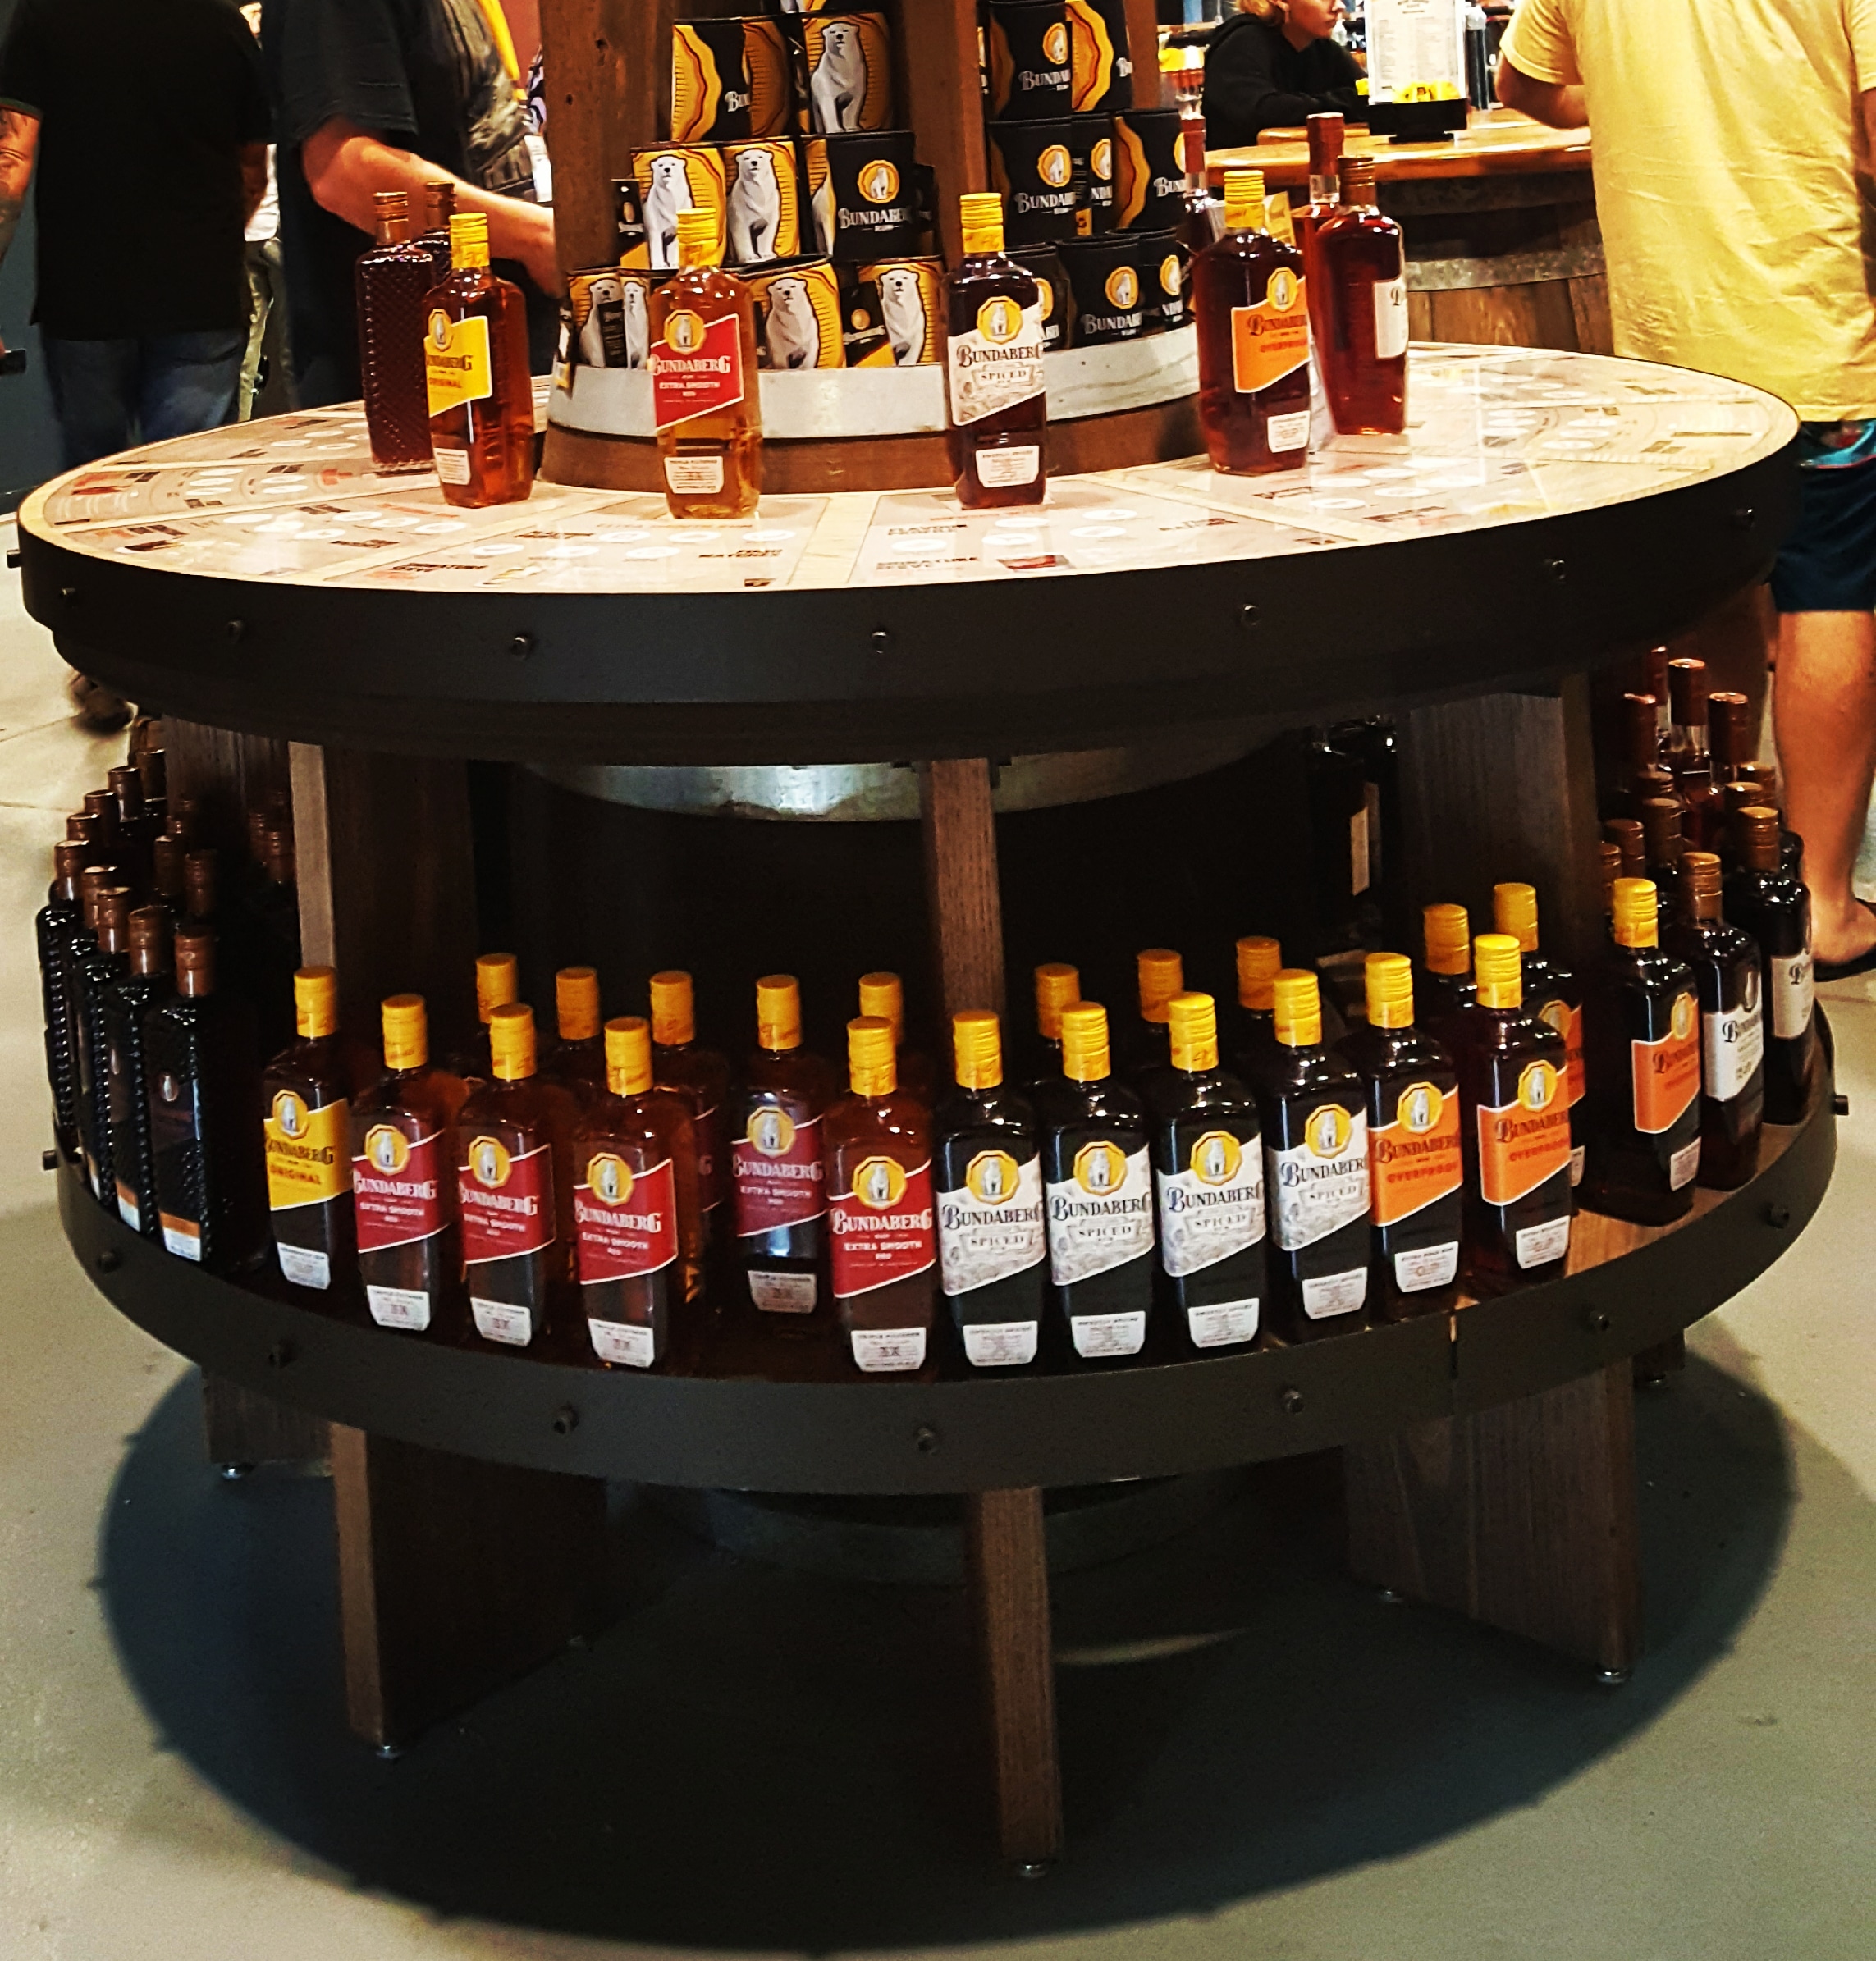 Bundaberg Rum's 11.5m lifeline to Australian hospitality industry THE NEXT RUSH